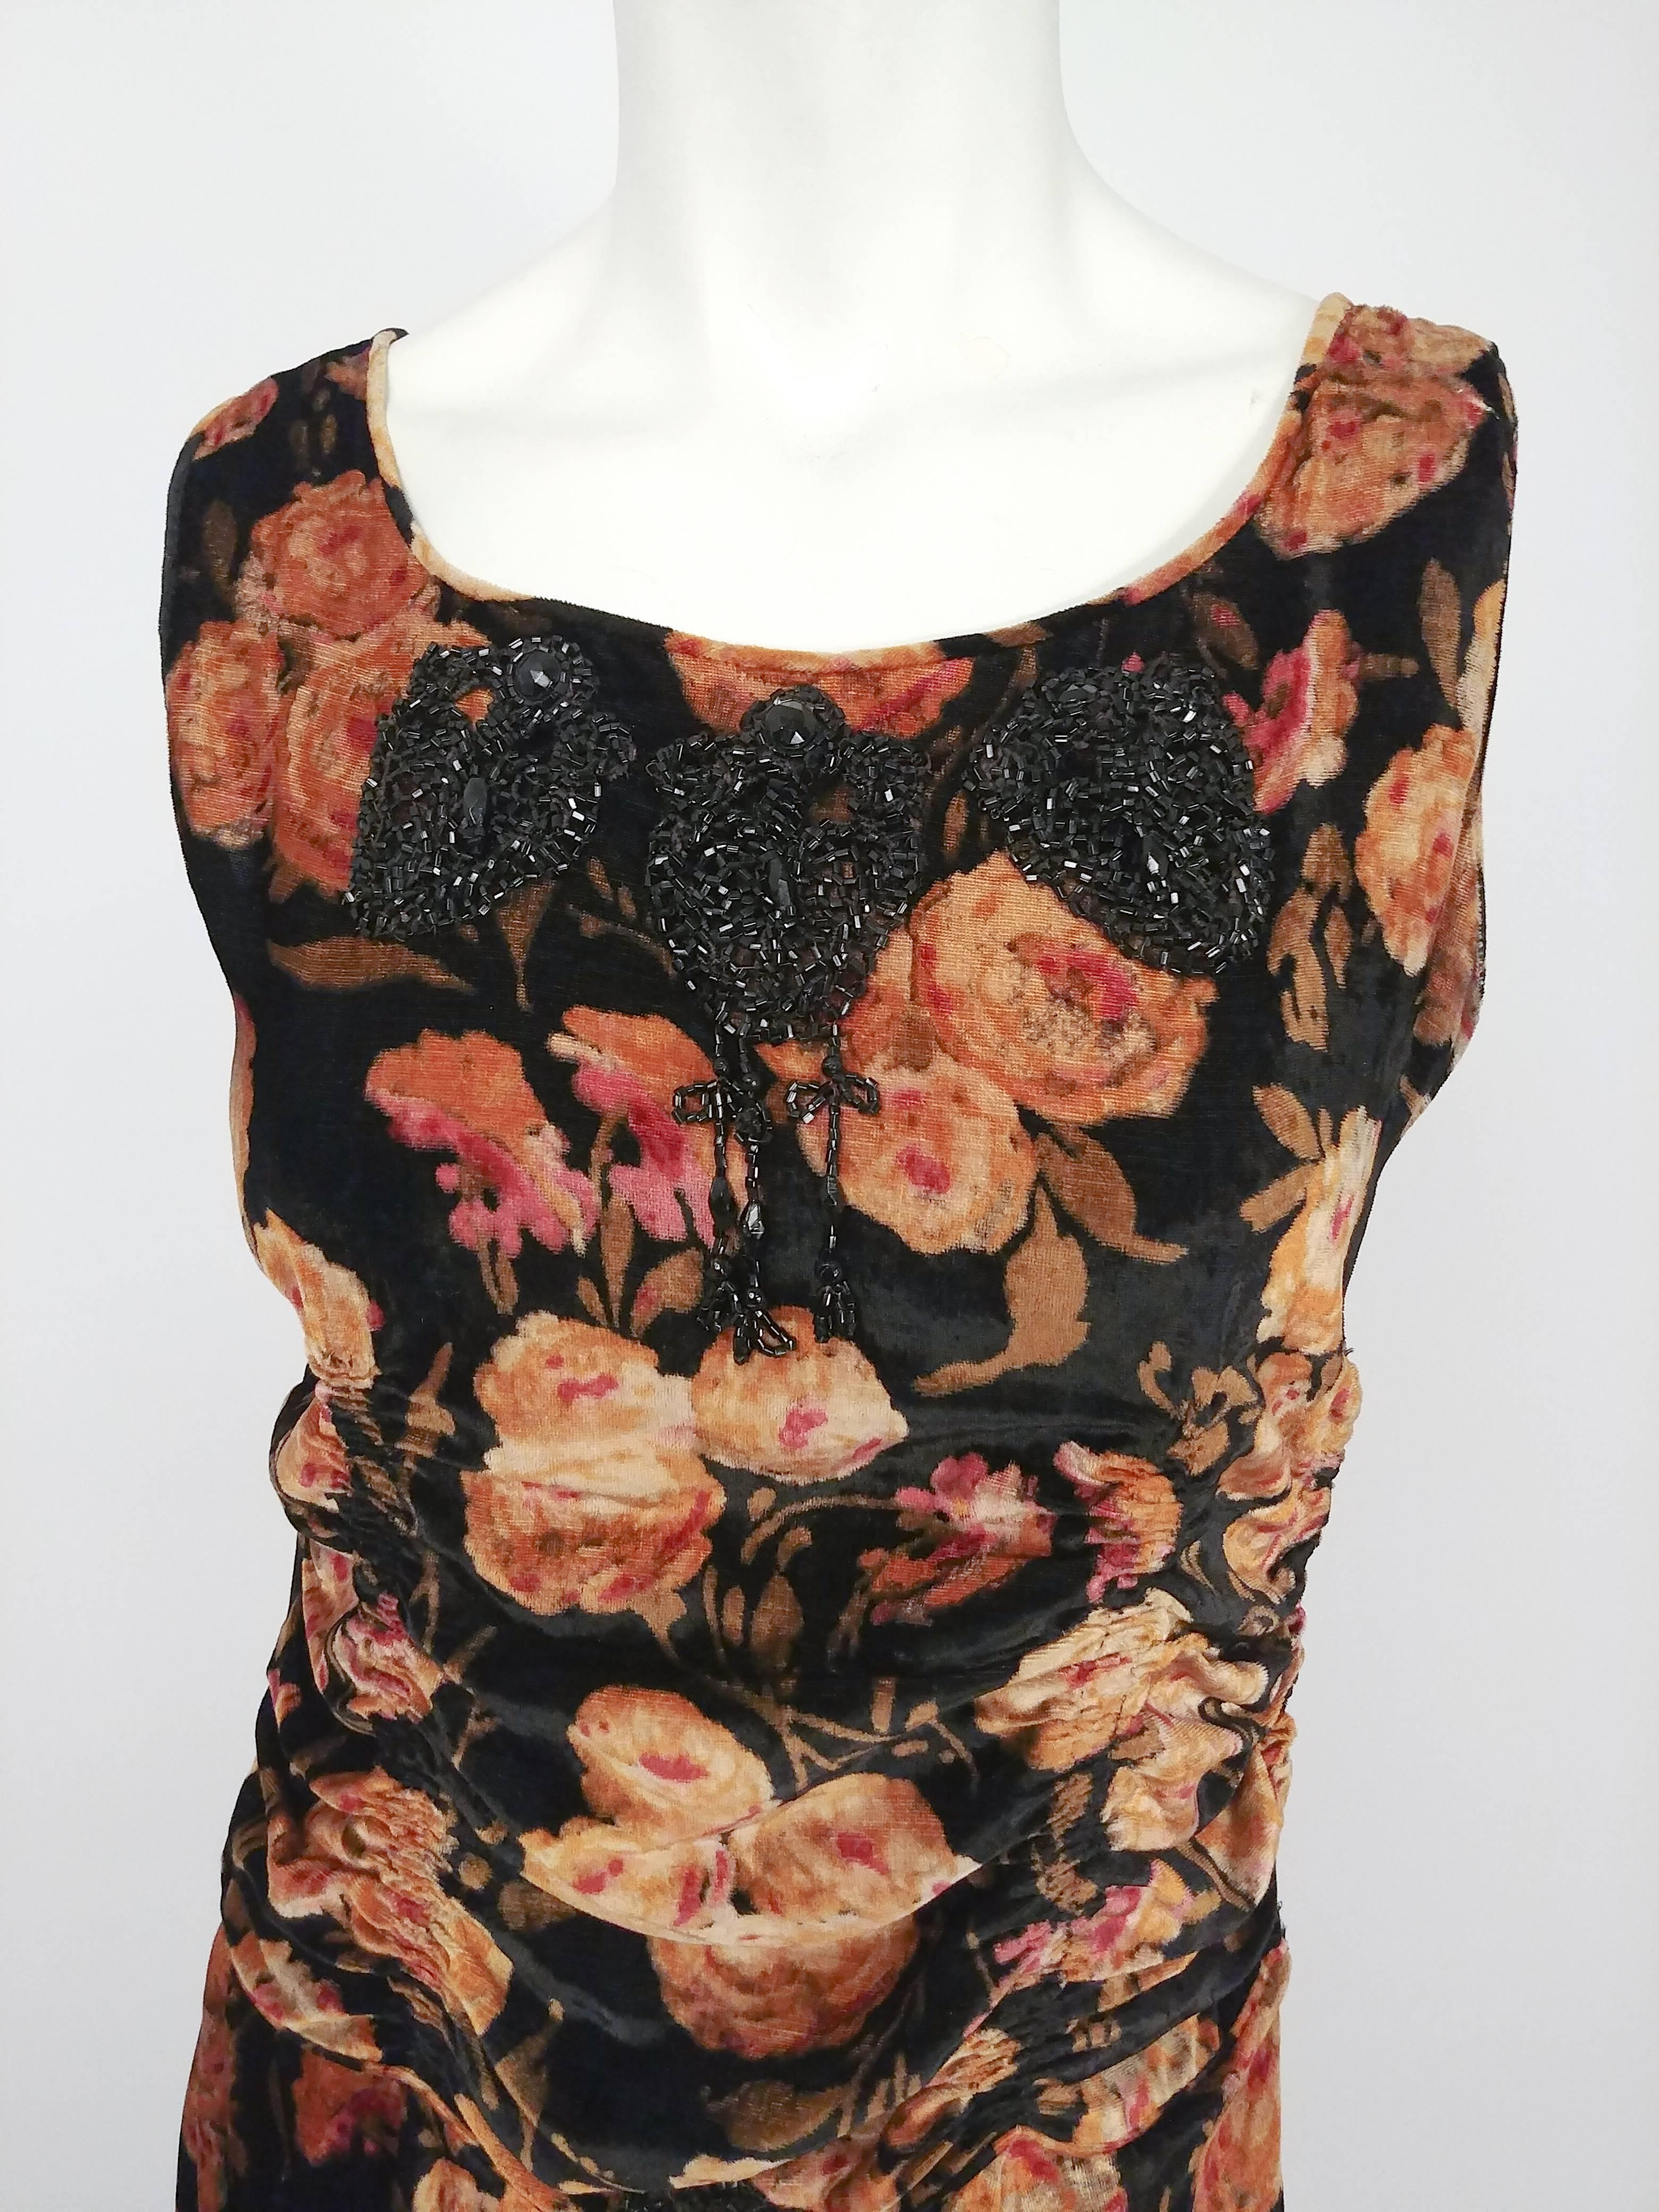 1920s Floral Velvet Dress w/ Black Beaded Applique. Black mesh draped high-low hem. Ruching detail at princess seams. Beaded applique at neckline and waistline. Side snap closure. 